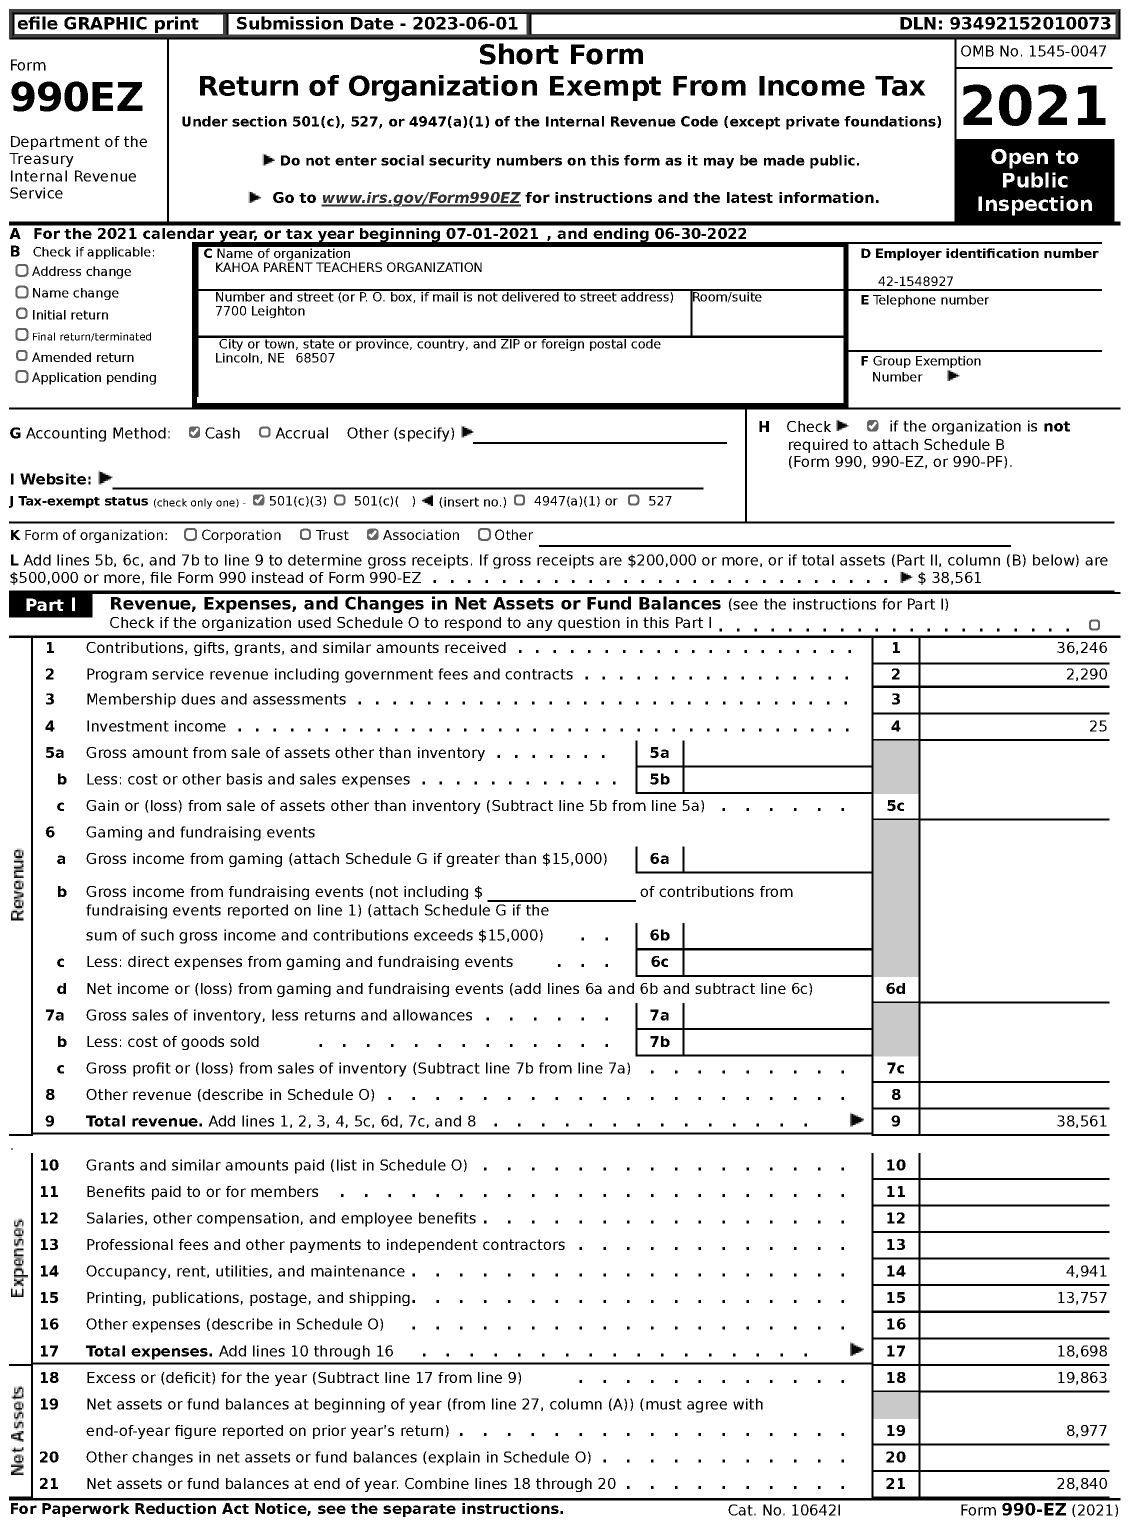 Image of first page of 2021 Form 990EZ for Kahoa Parent Teachers Organization